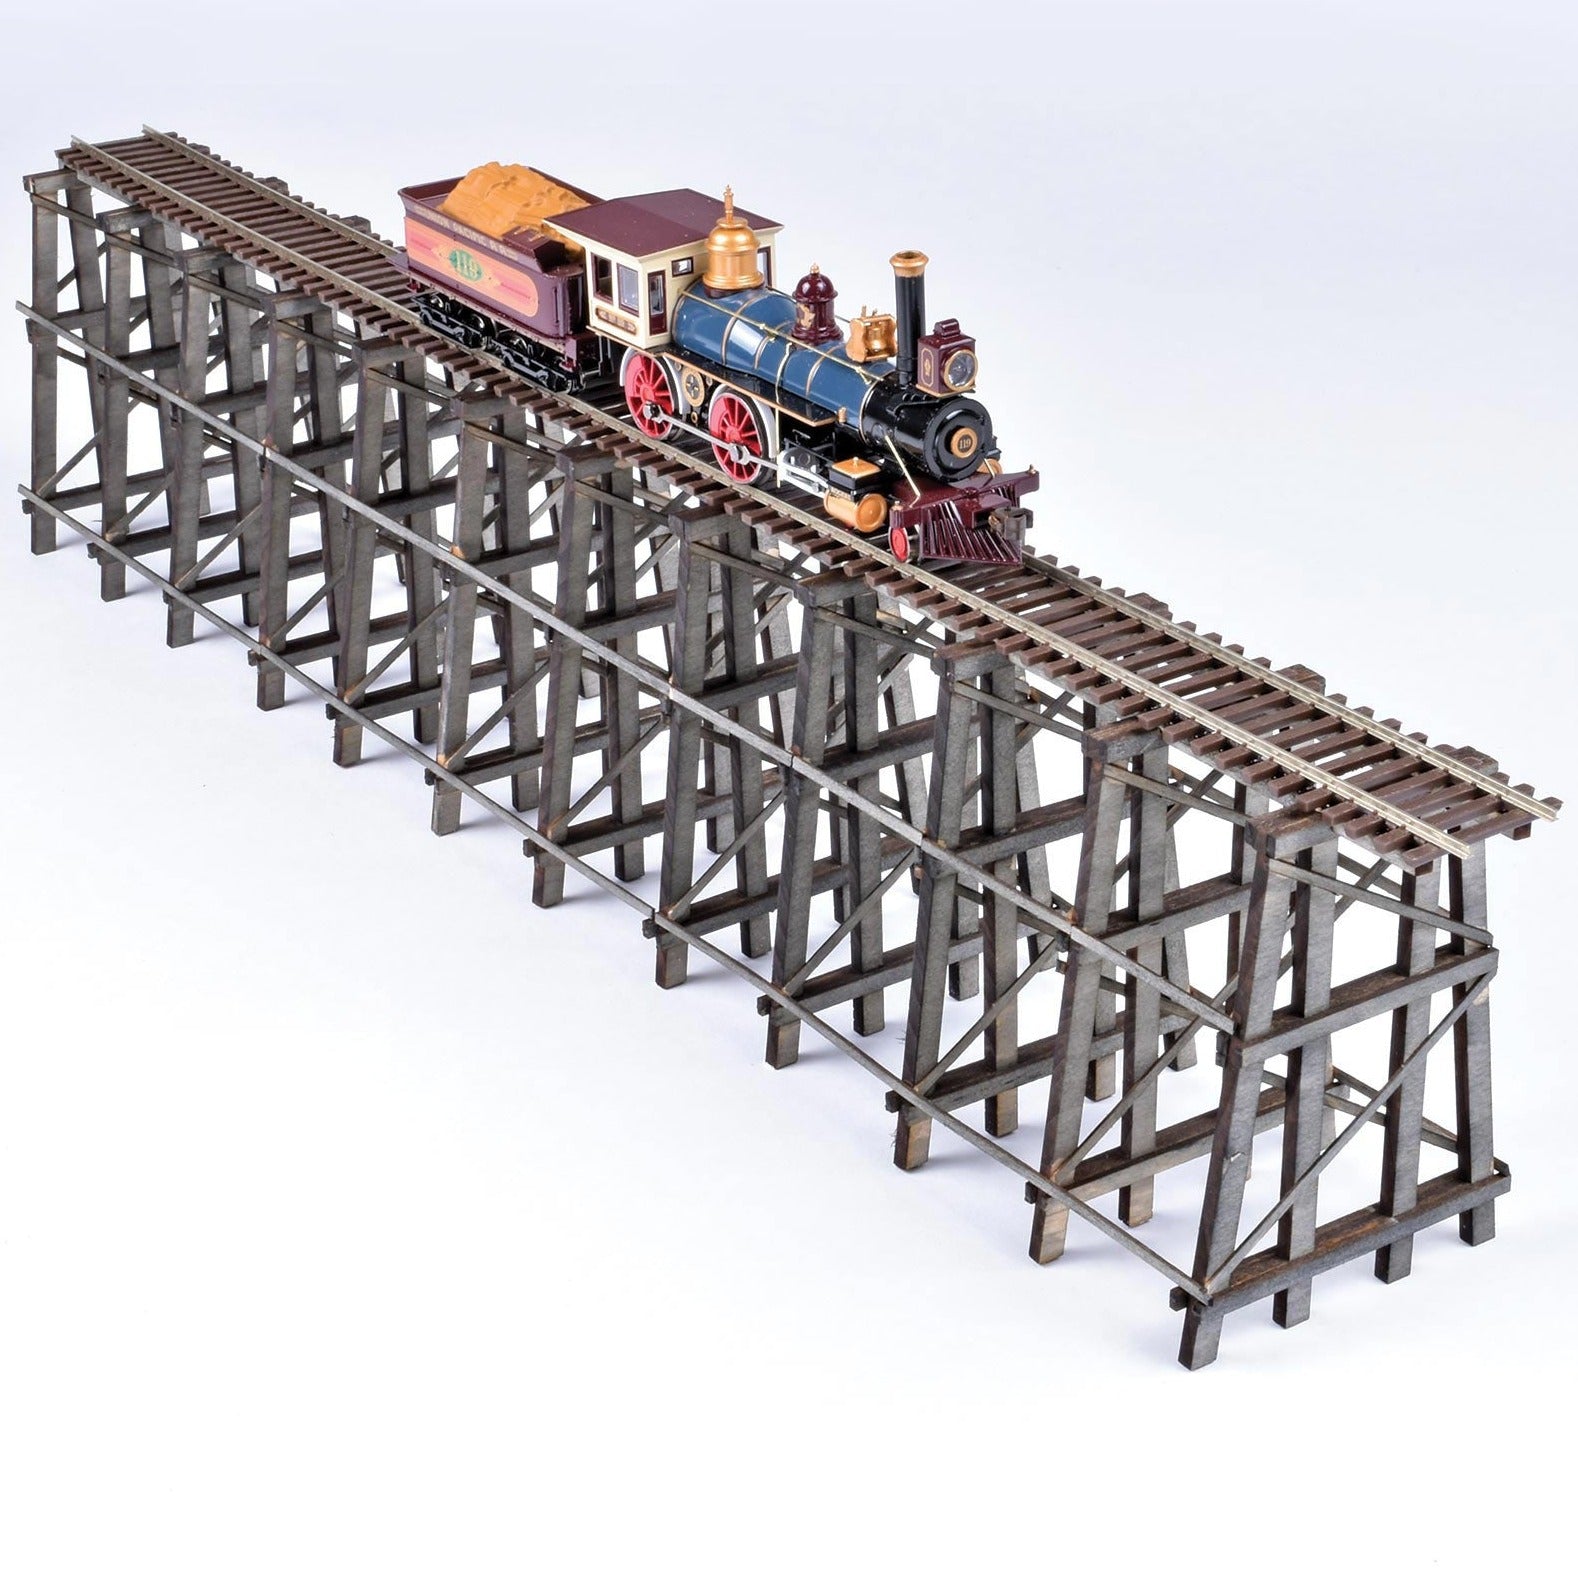 16 - 1/2" Wooden Trestle Bridge, HO Scale, by Scientific - Micro - Mark Laser Model Kits